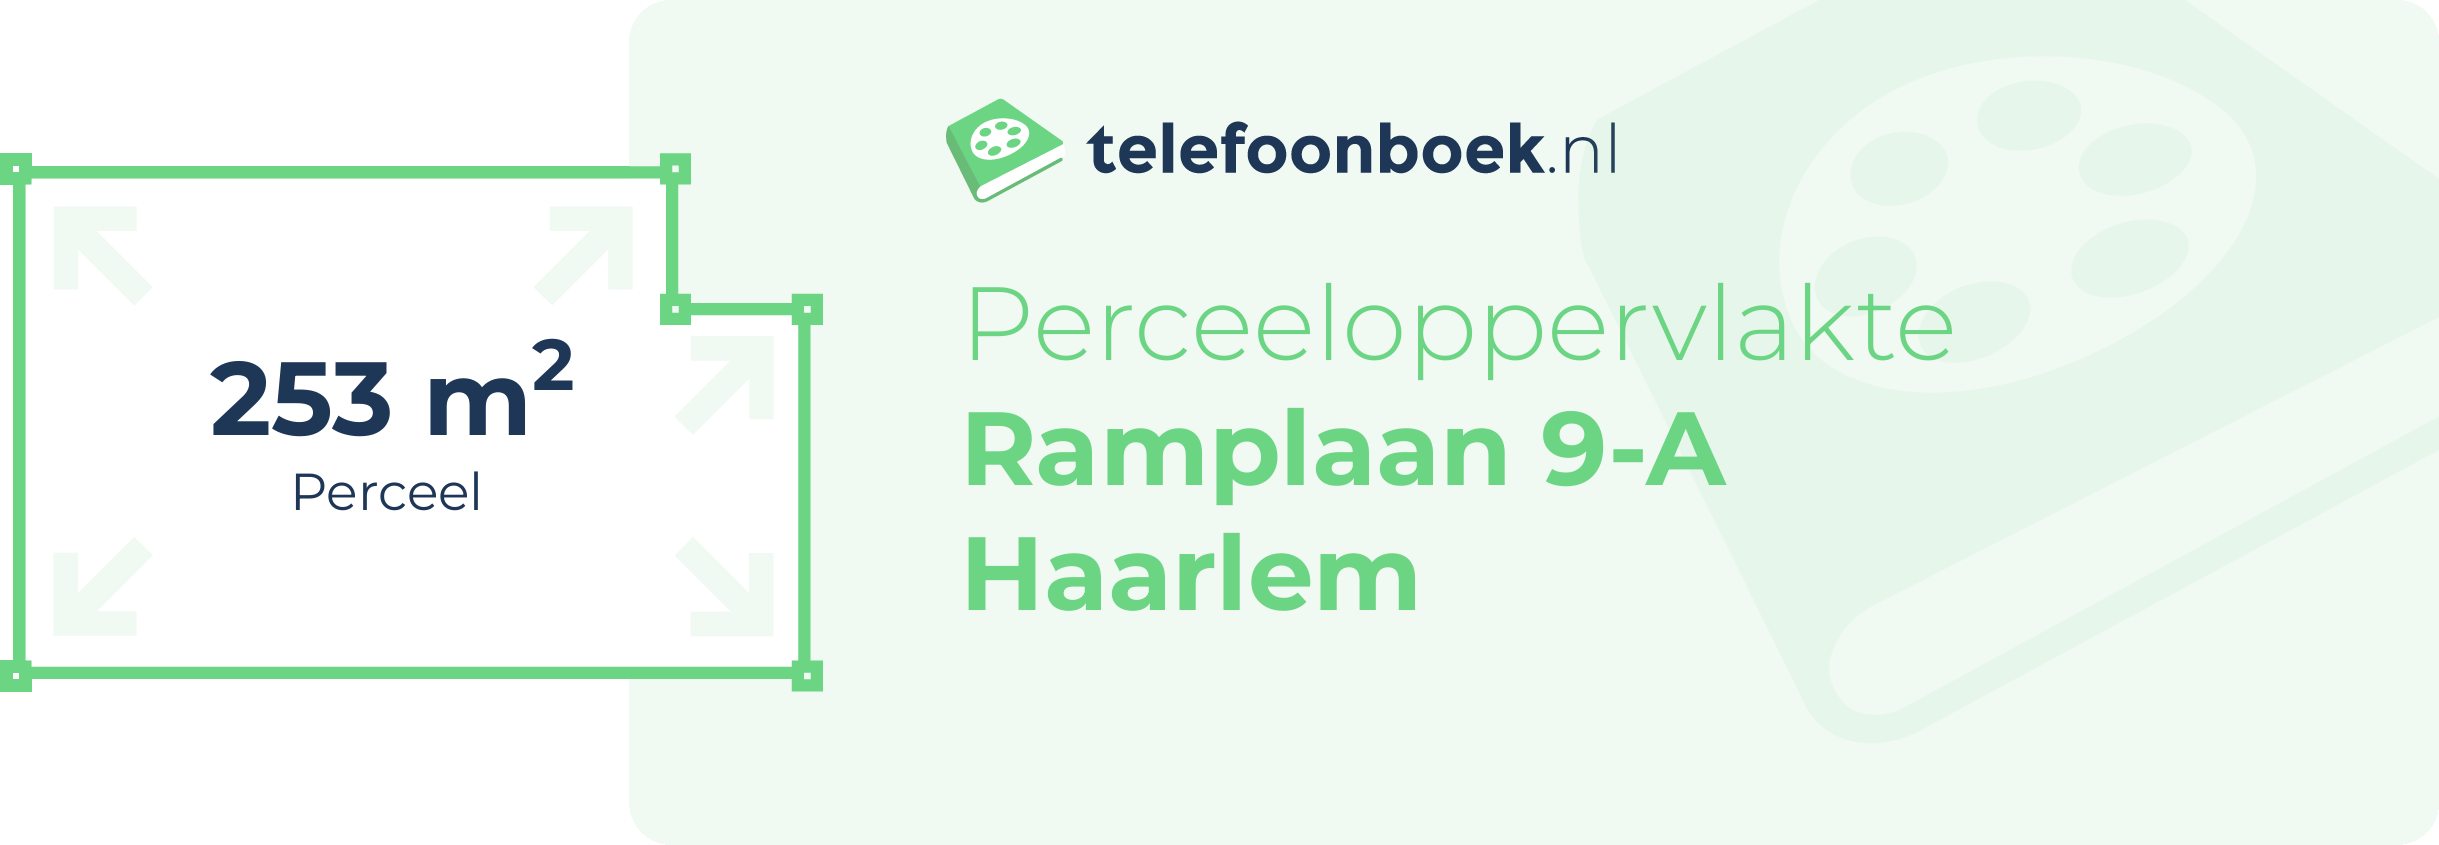 Perceeloppervlakte Ramplaan 9-A Haarlem